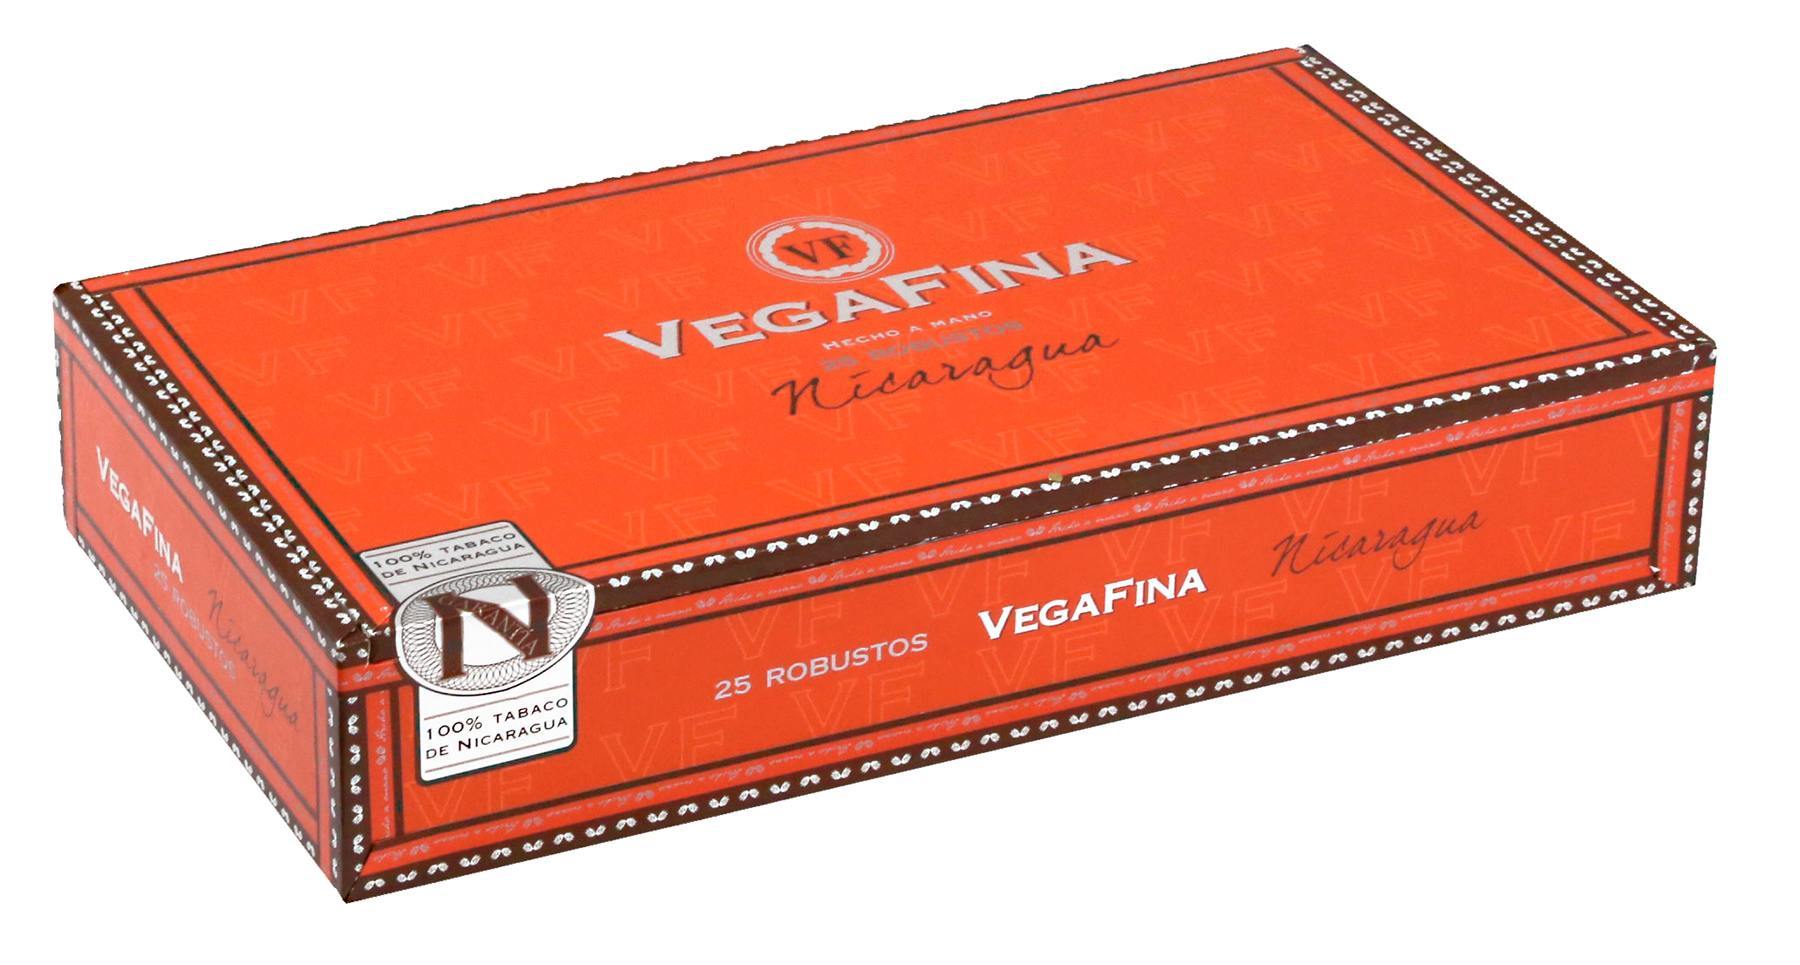 VegaFina Nicaragua Box Close